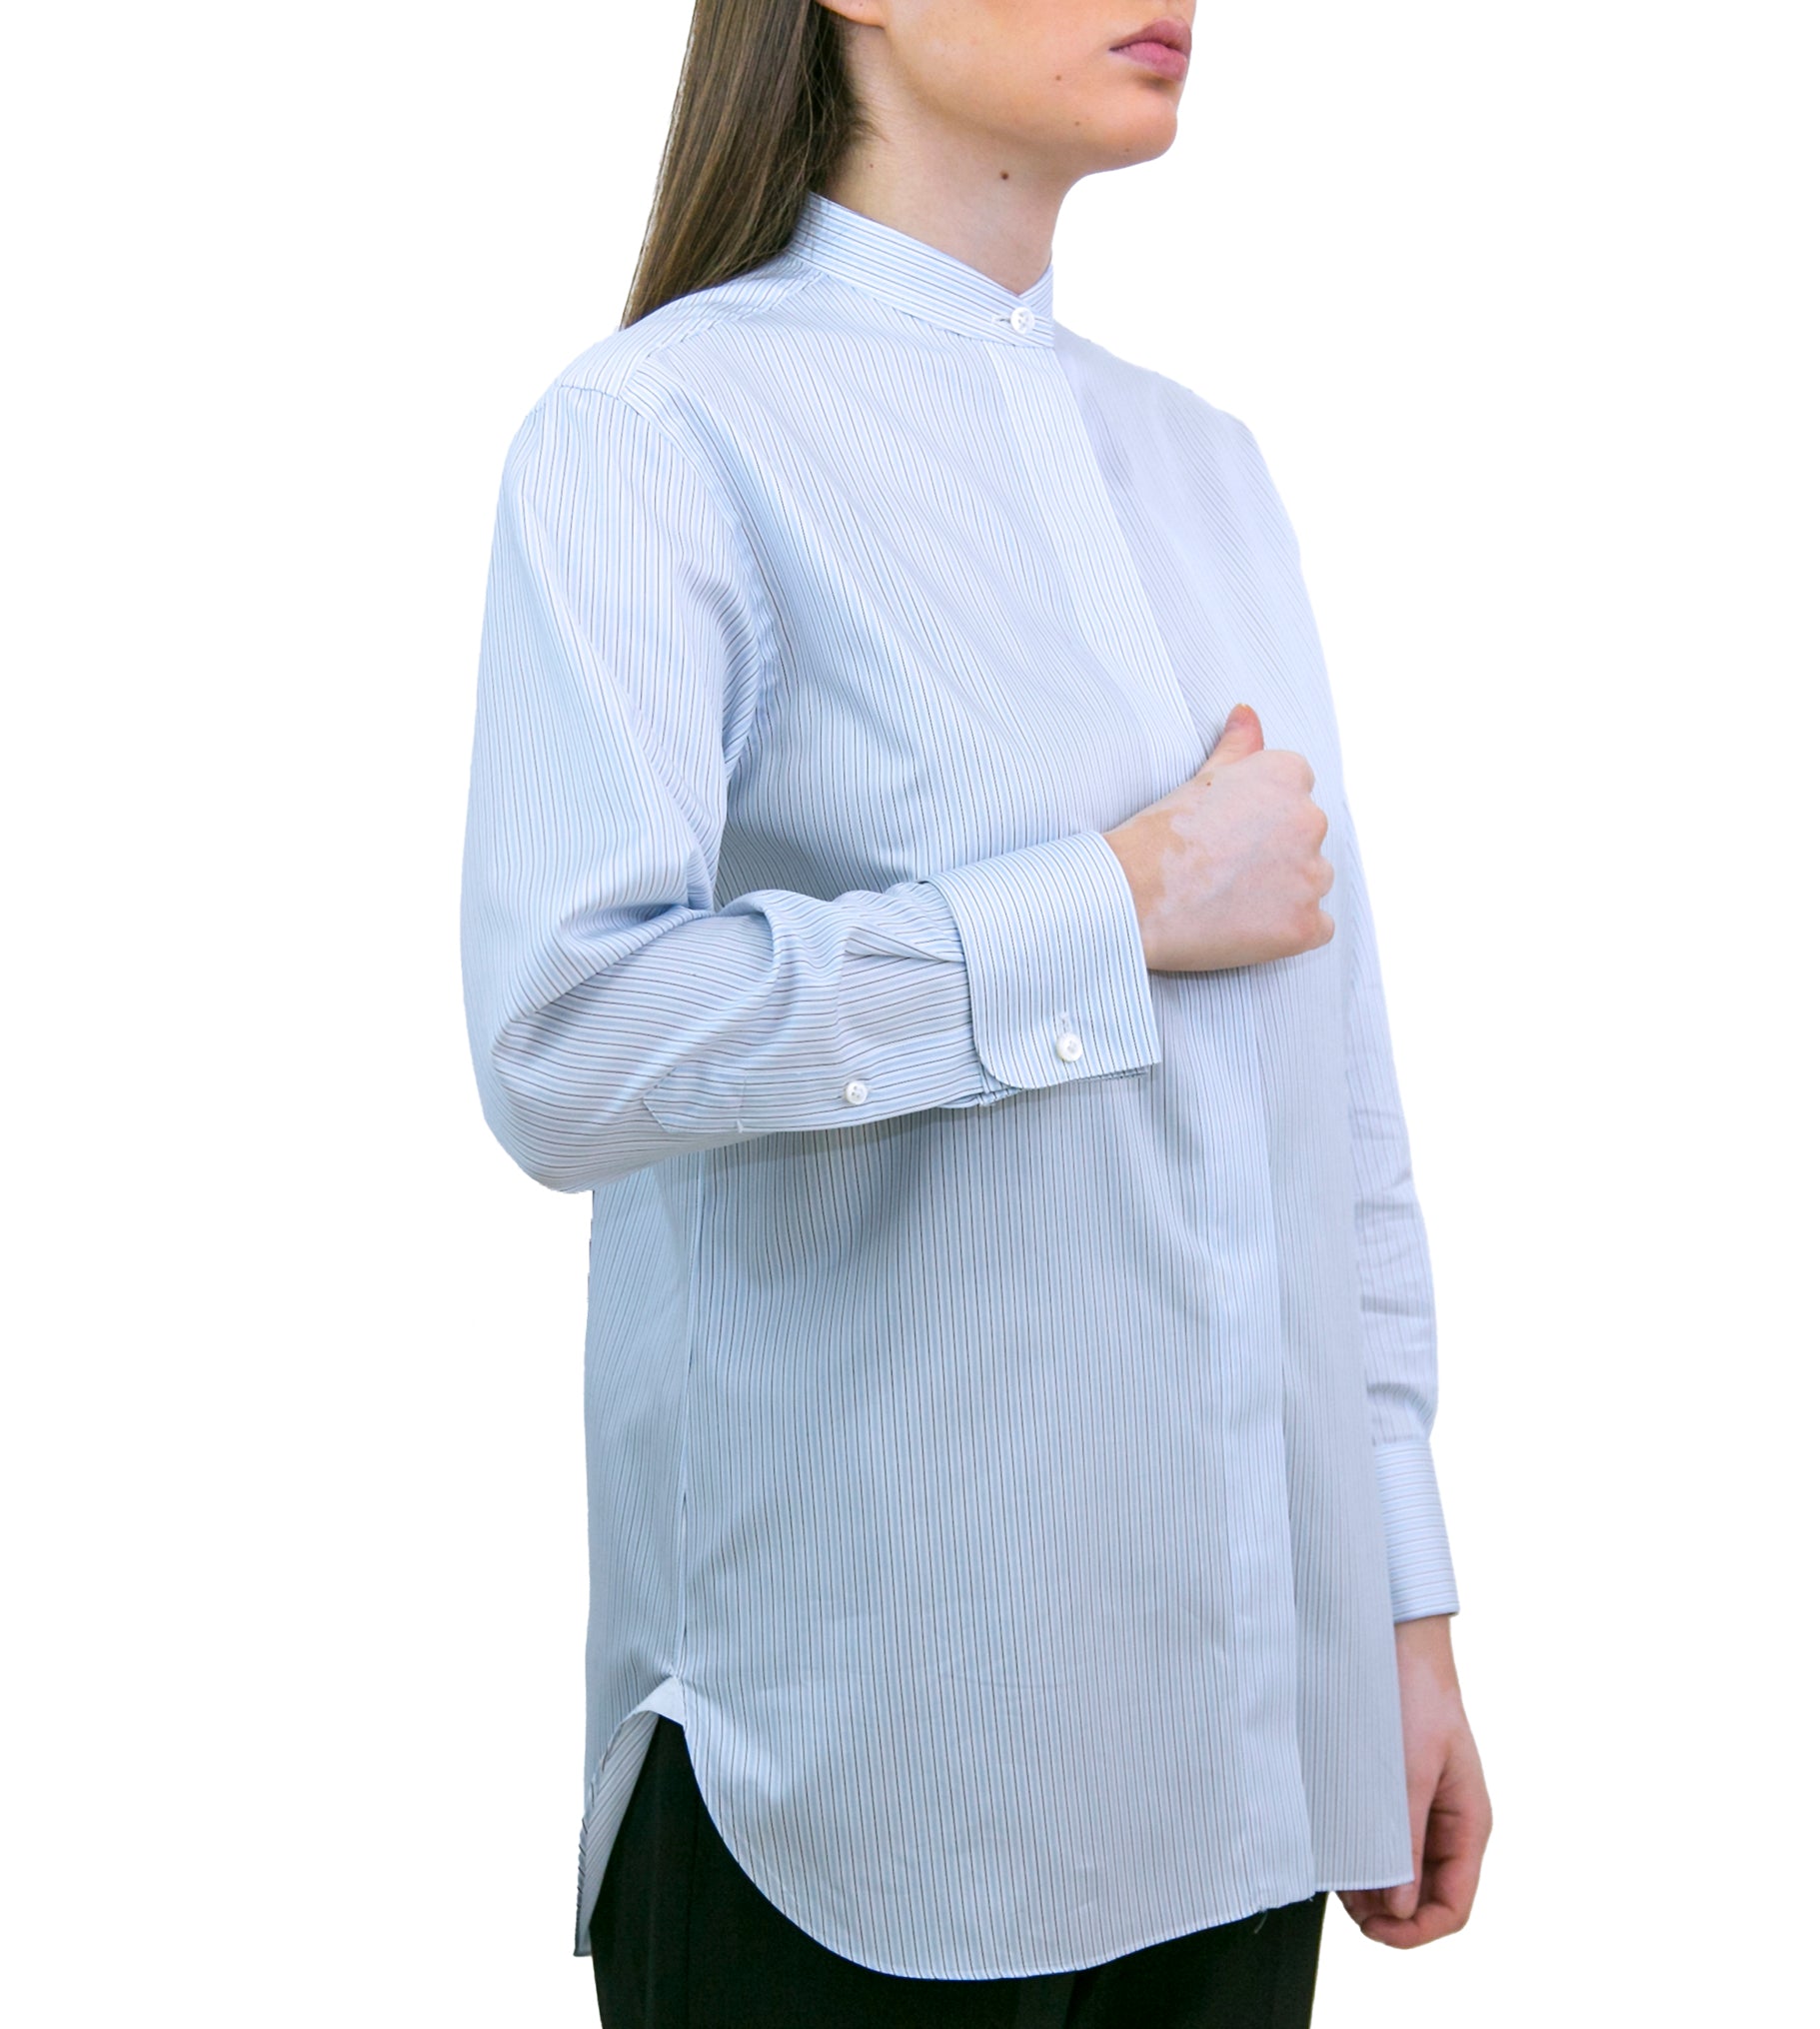 Ladies' shirt Delia "170 a due" white striped bottoms